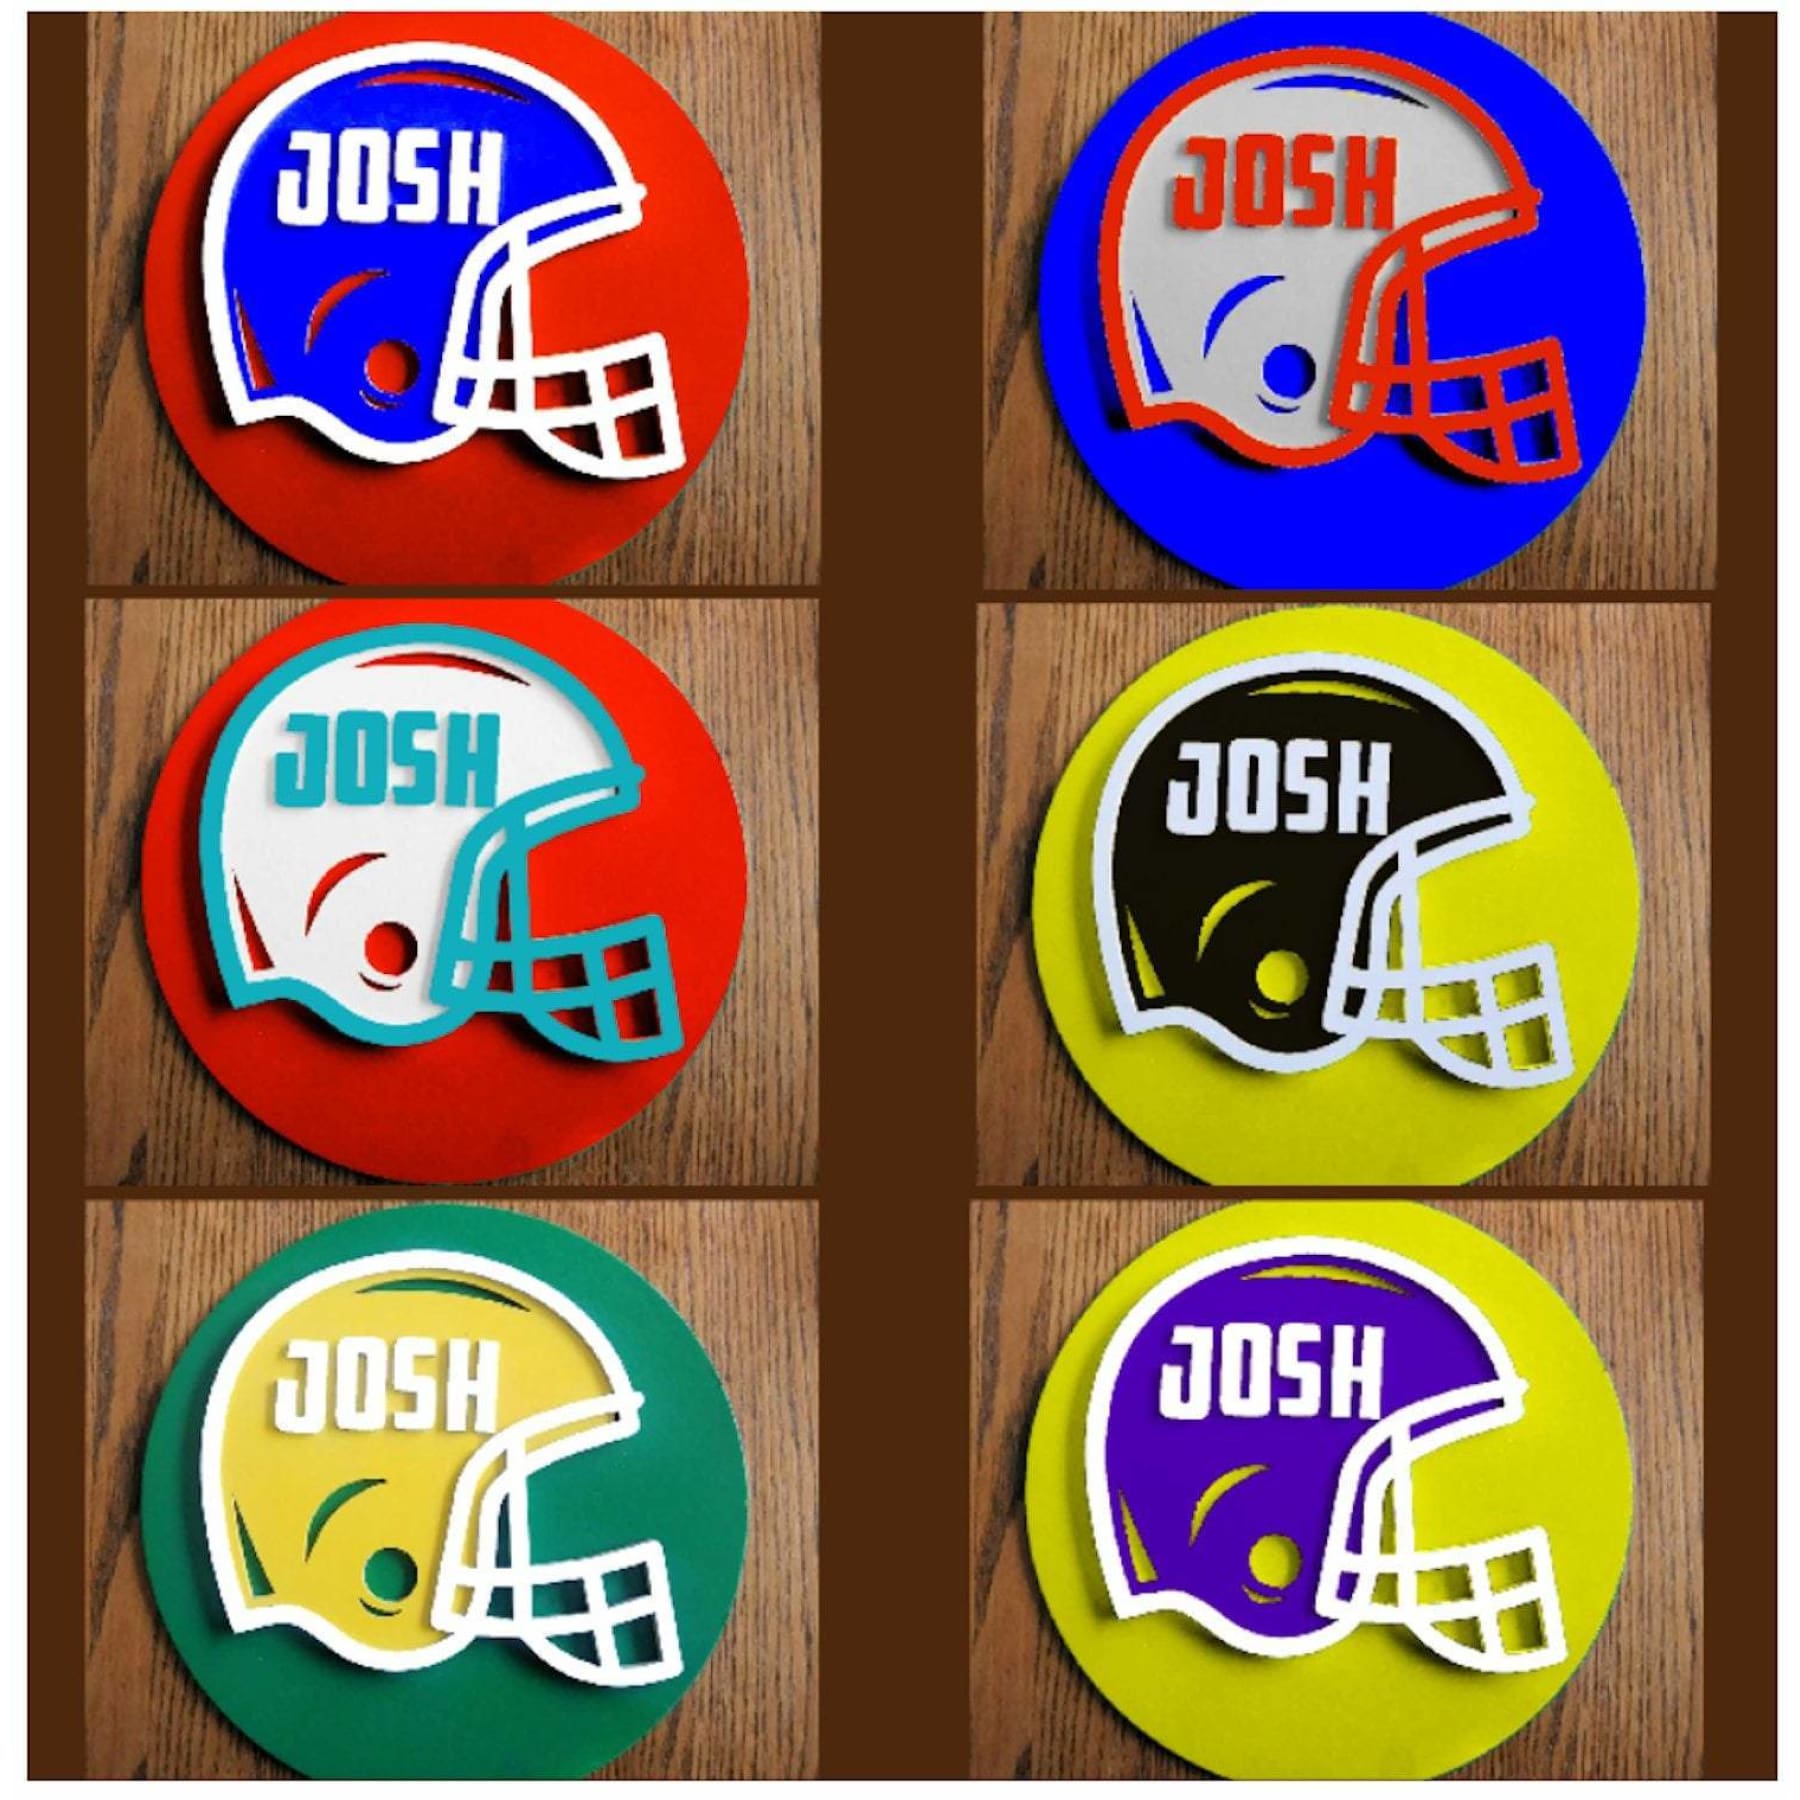 Football Helmet Wall Decor, any color with custom name, NFL, Big Ten or Local teams